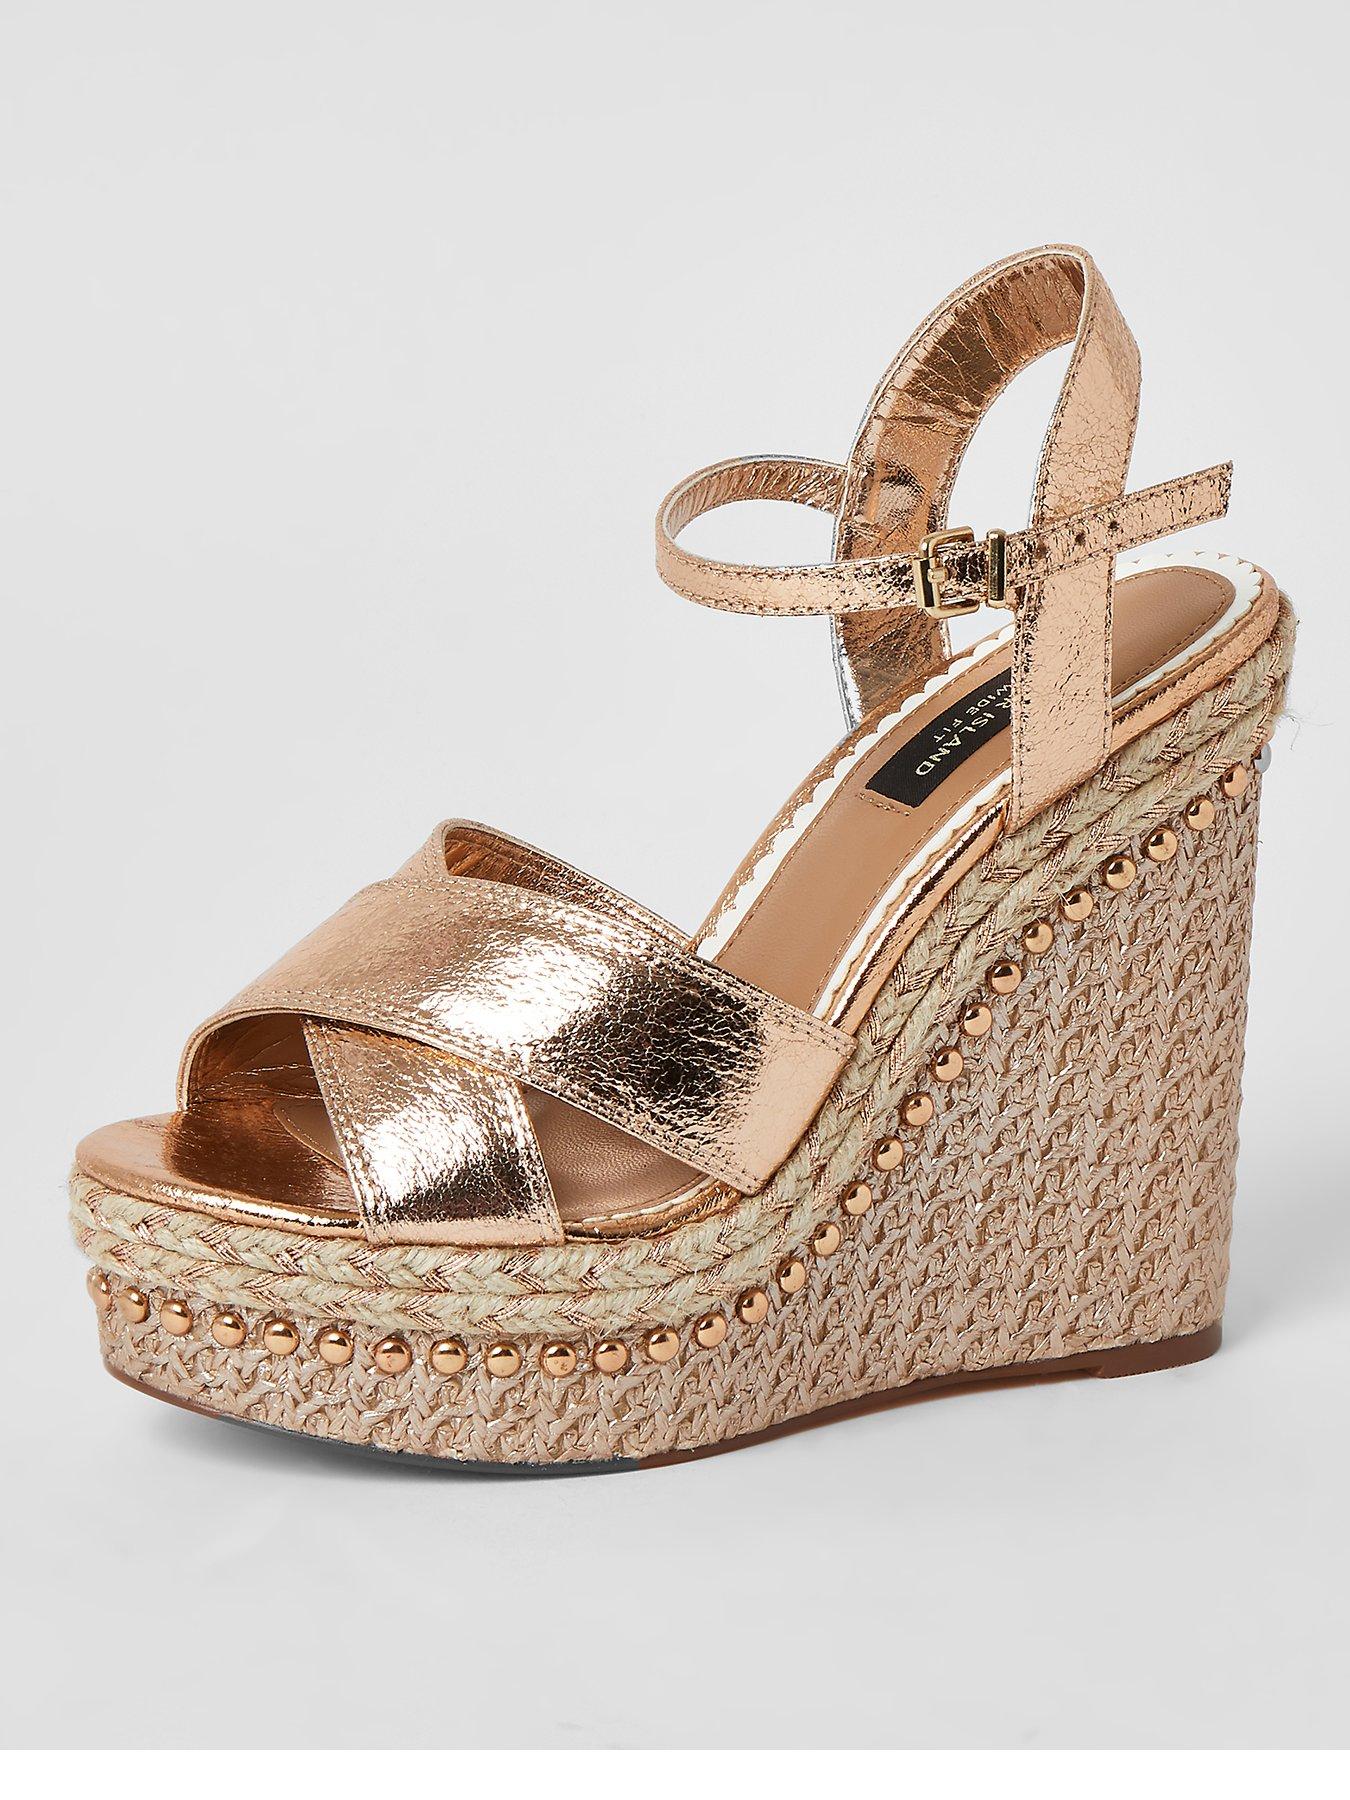 river island sale heels